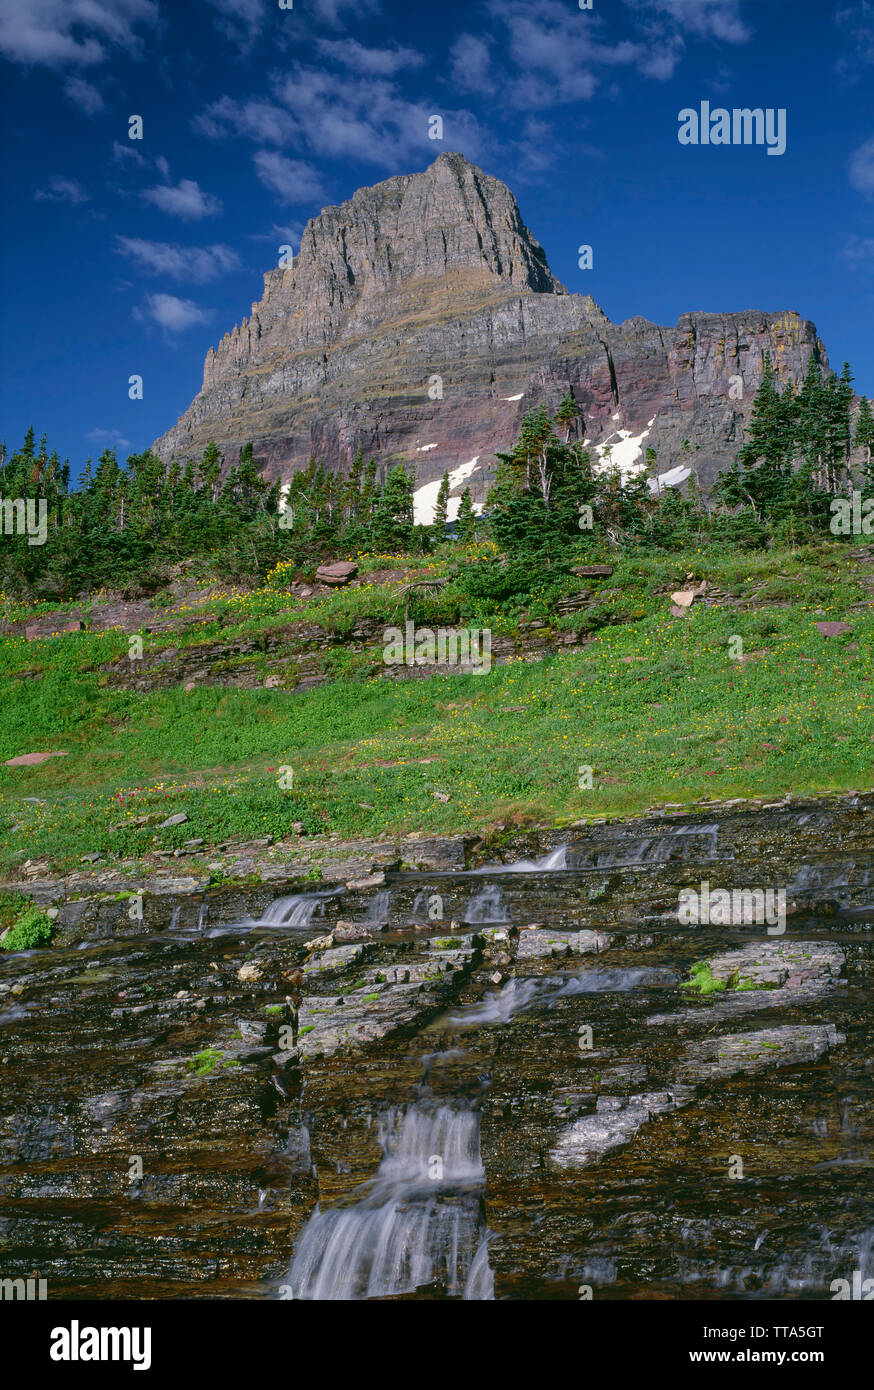 USA, Montana, Glacier National Park, Small waterfall on Logan Creek descends sedimentary layers beneath Clements Mountain. Stock Photo